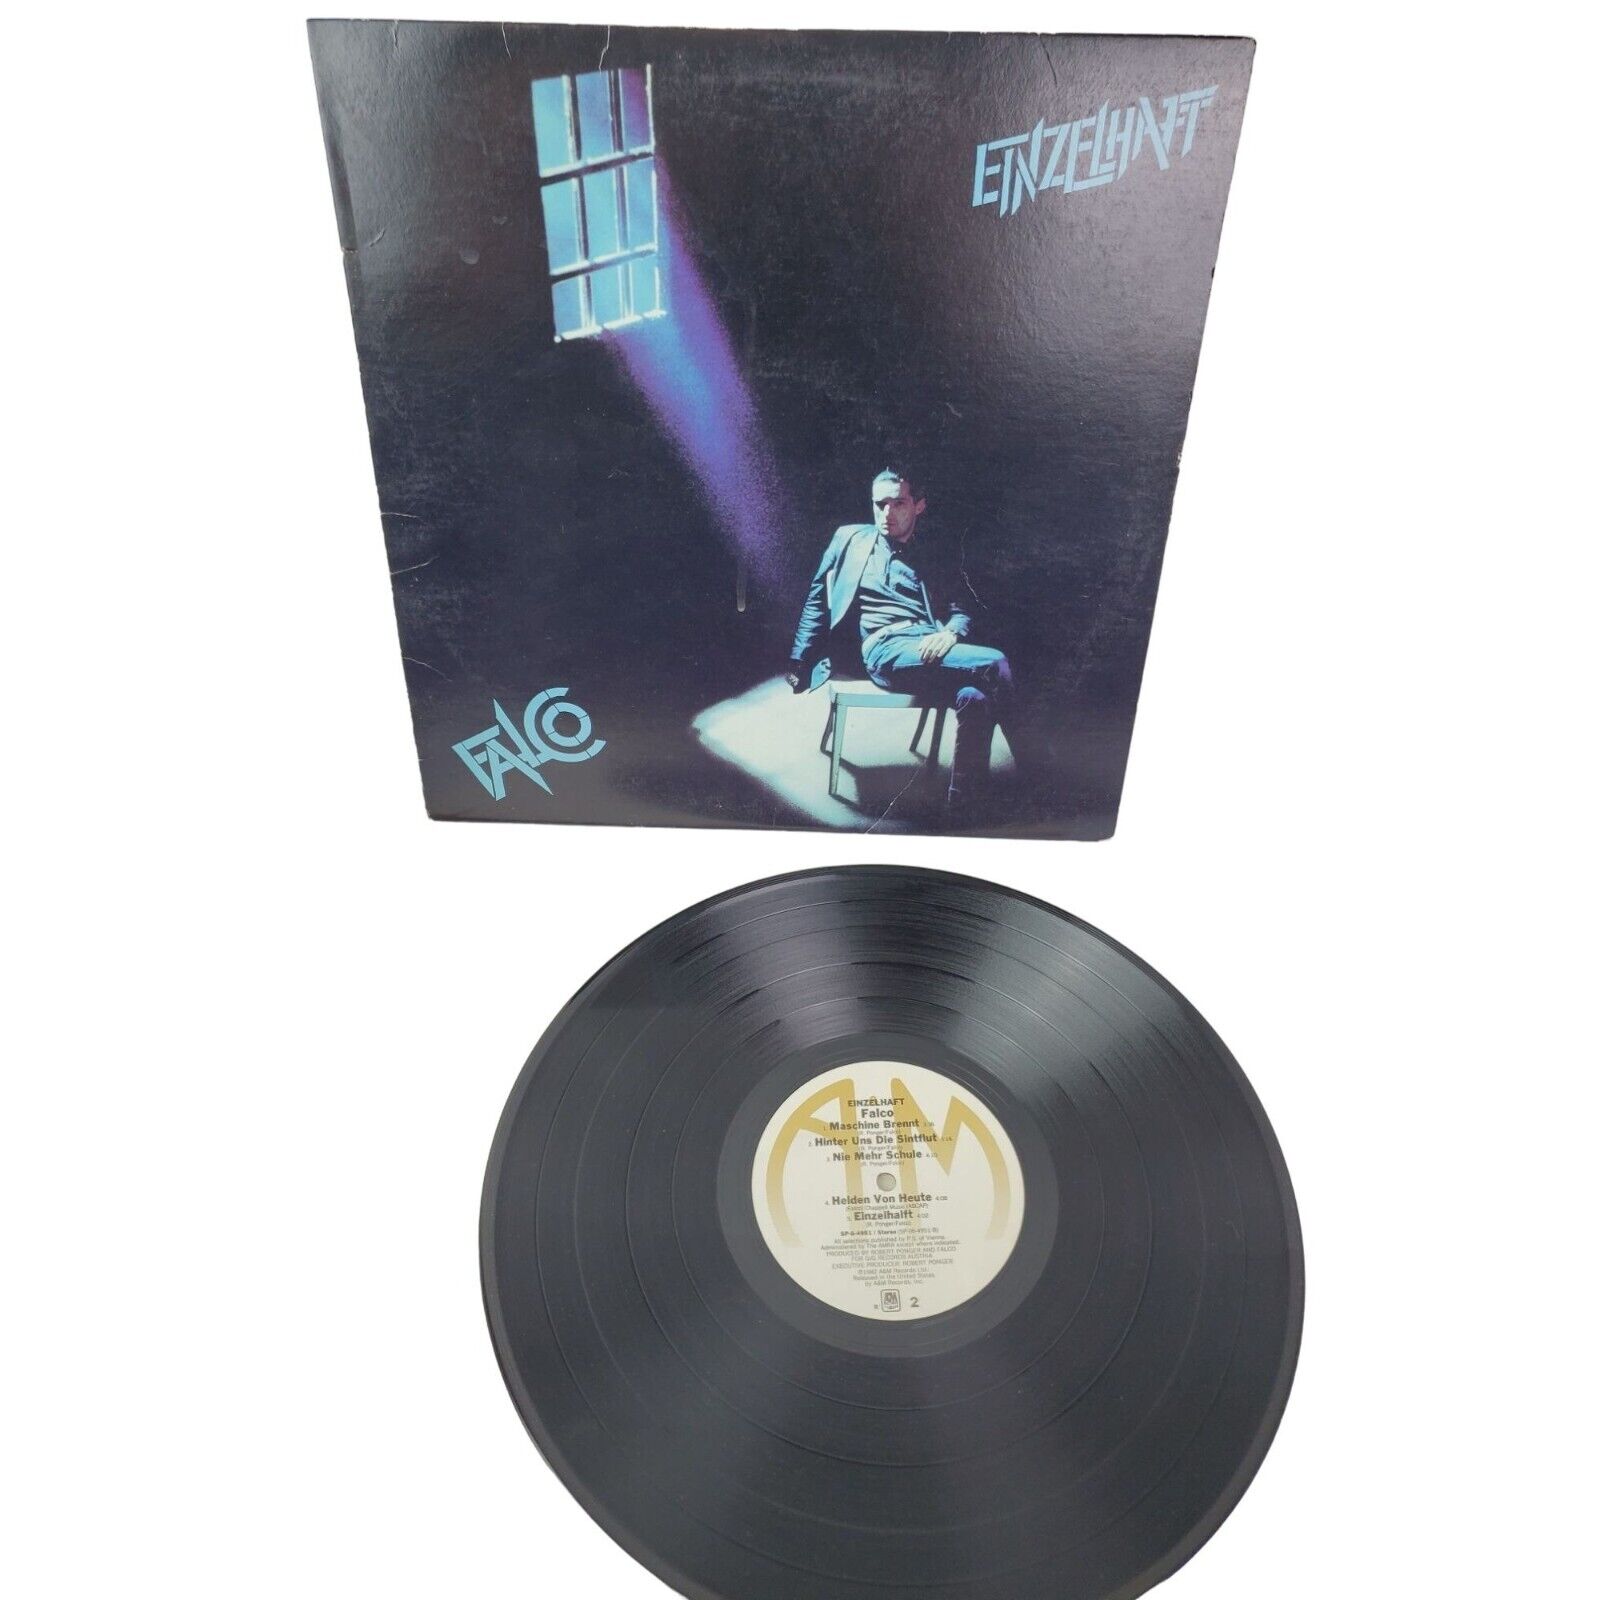 Vintage 80s Falco Einzelhaft Vinyl Album German Music Record GUC